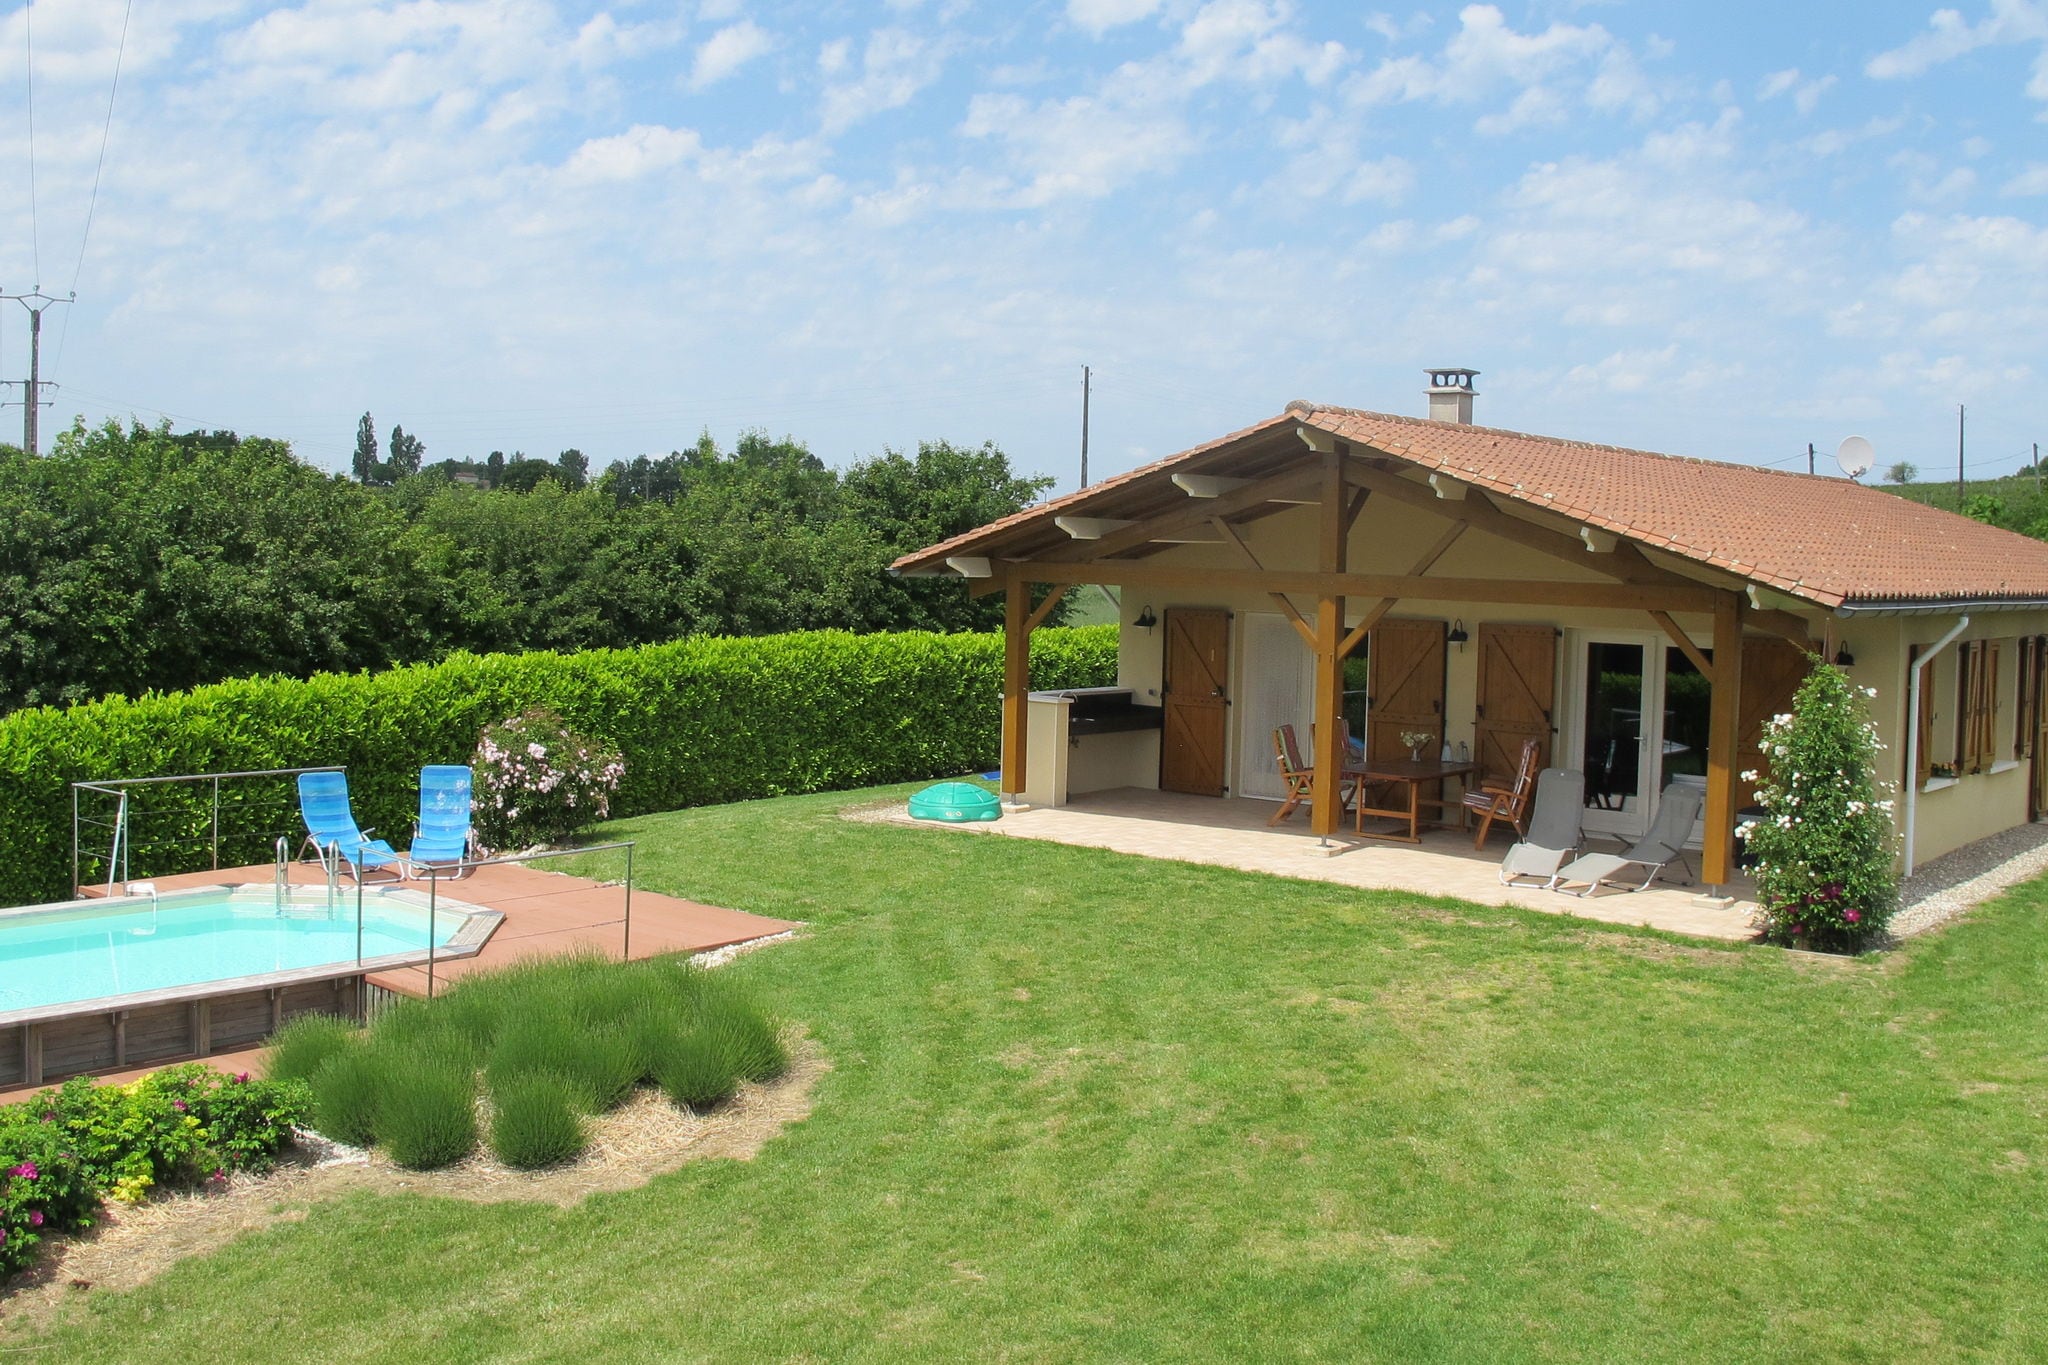 Résidence de vacances spacieuse à Sadillac avec piscine